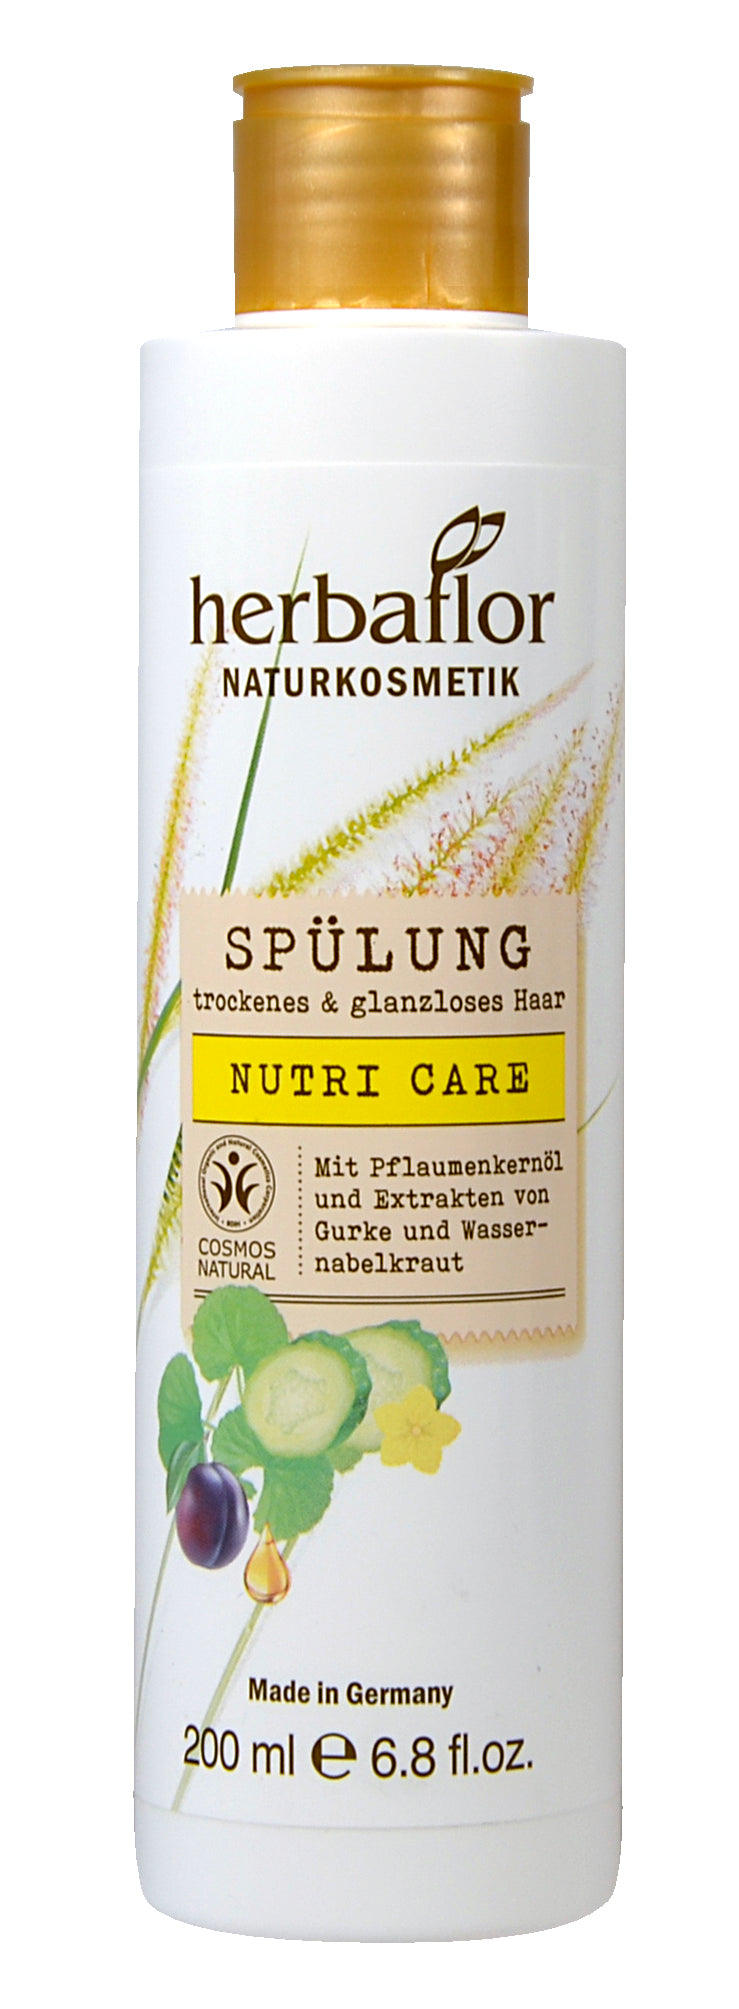 Nutri Care conditioner natural cosmetics 200 ml